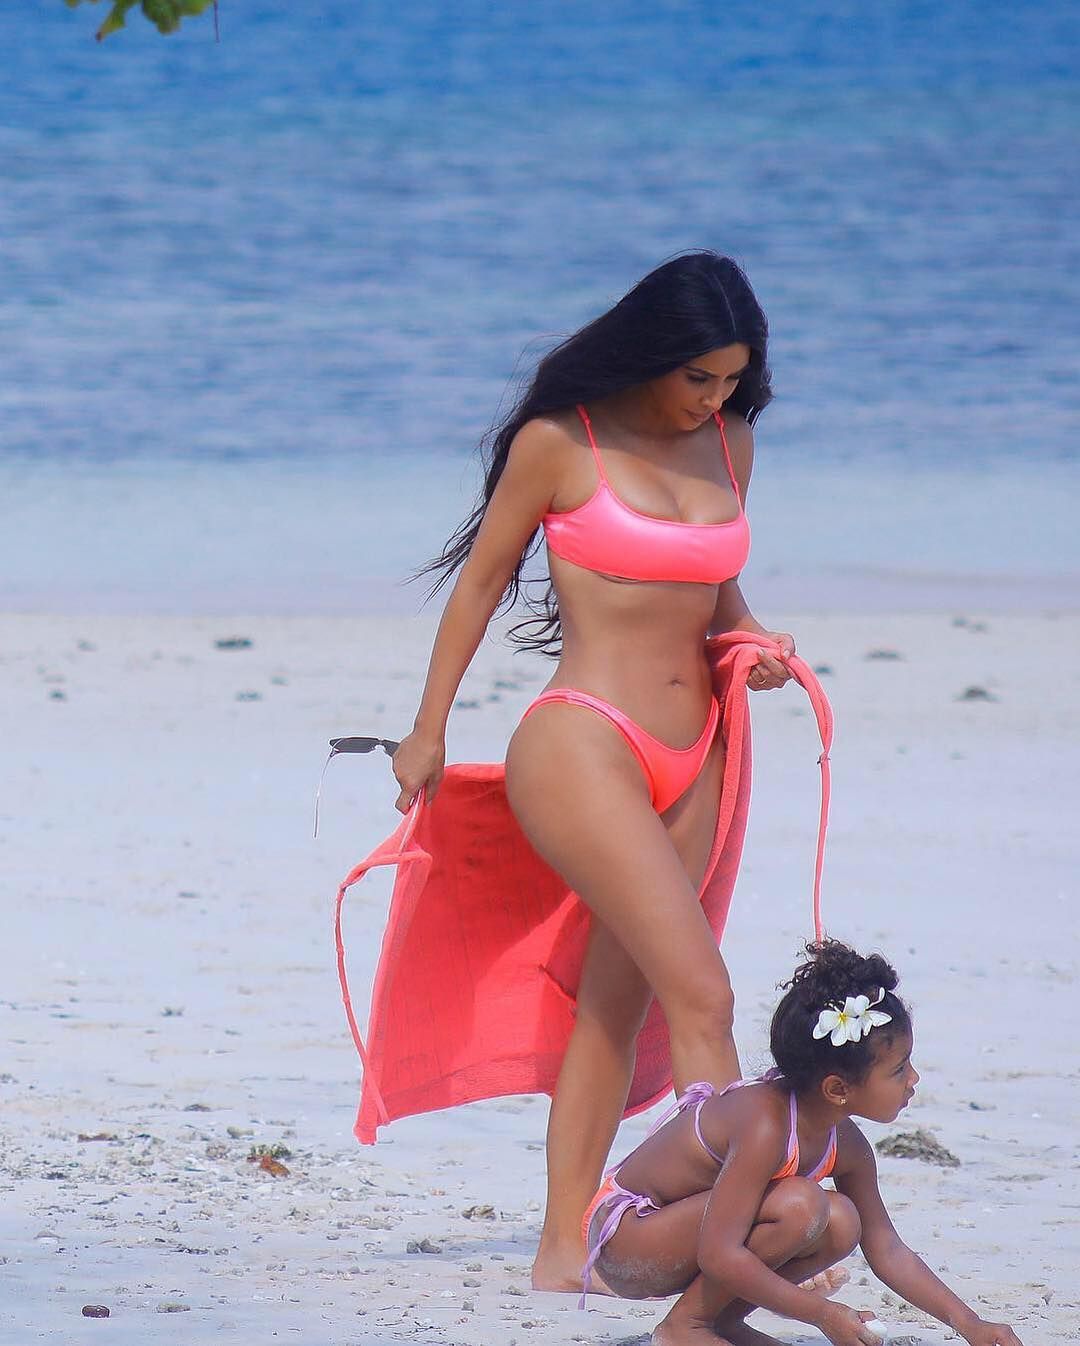 Actress Kim Kardashian Hot and Spicy Photos in Bikini